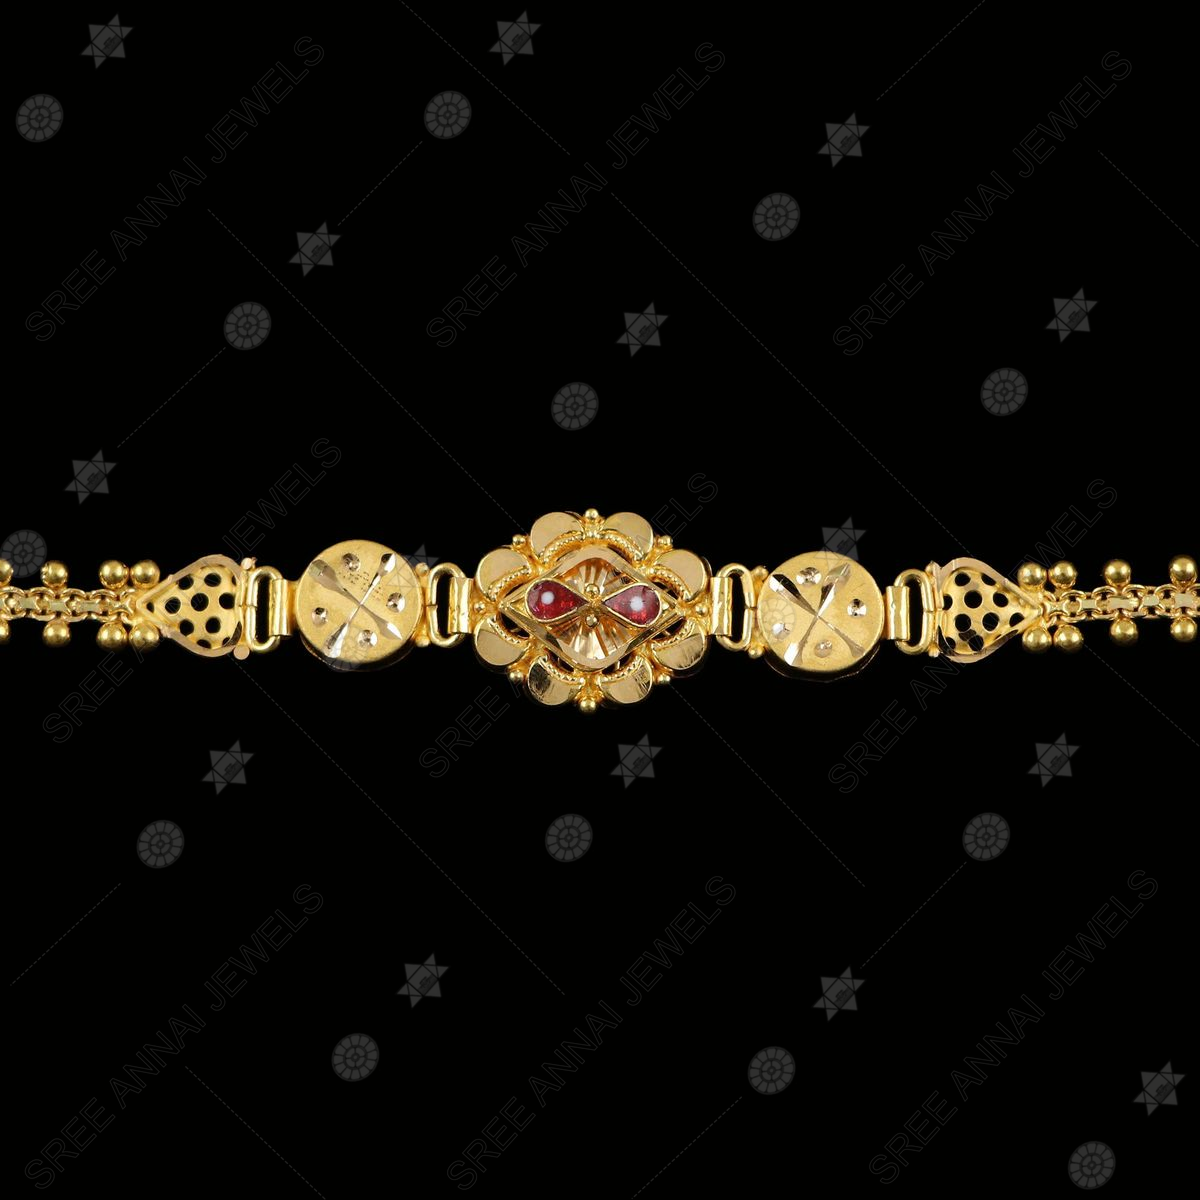 Buy quality Men's Fancy Handmade 22k Gold Bracelet in Rajkot